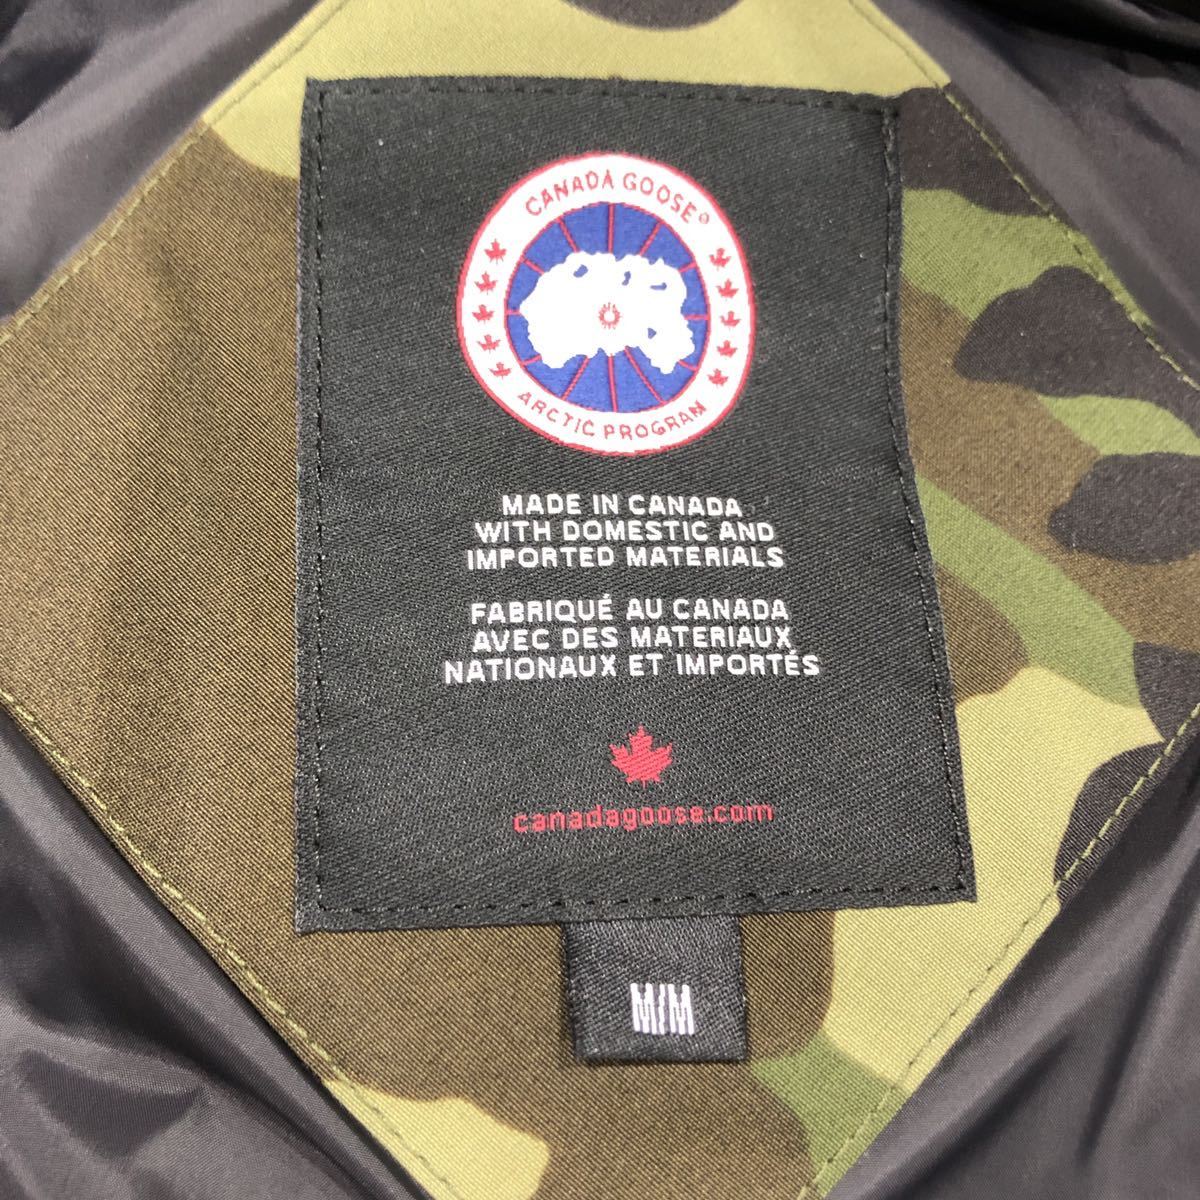 [CANADA GOOSE]MAITLAND PARKA down jacket Canada Goose M green green camouflage -ju nylon 4550M ts202402